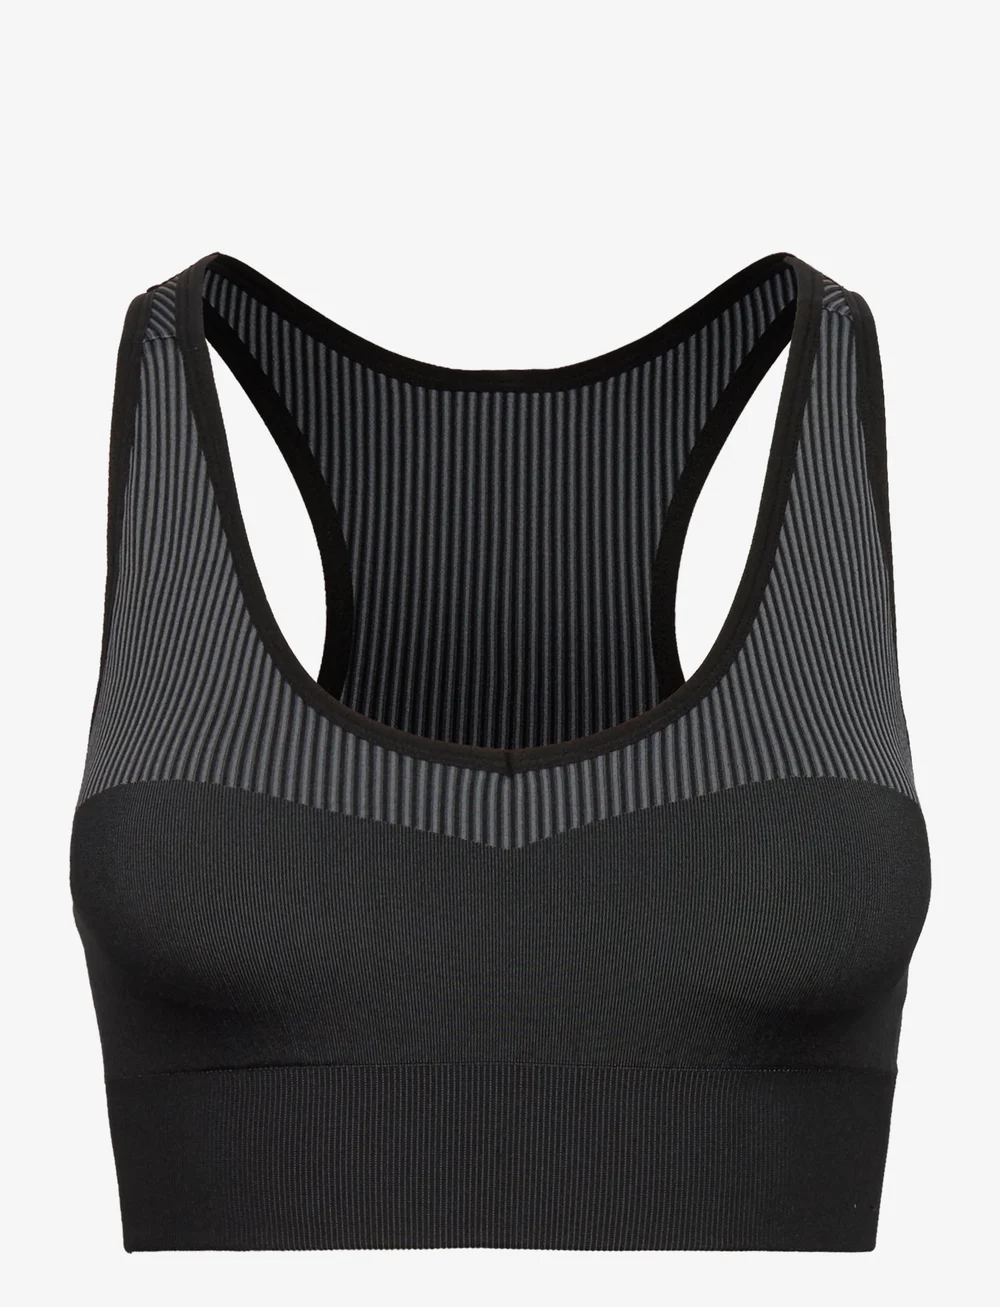 Reebok Performance Yoga Seamless Sports Bra – bras – shop at